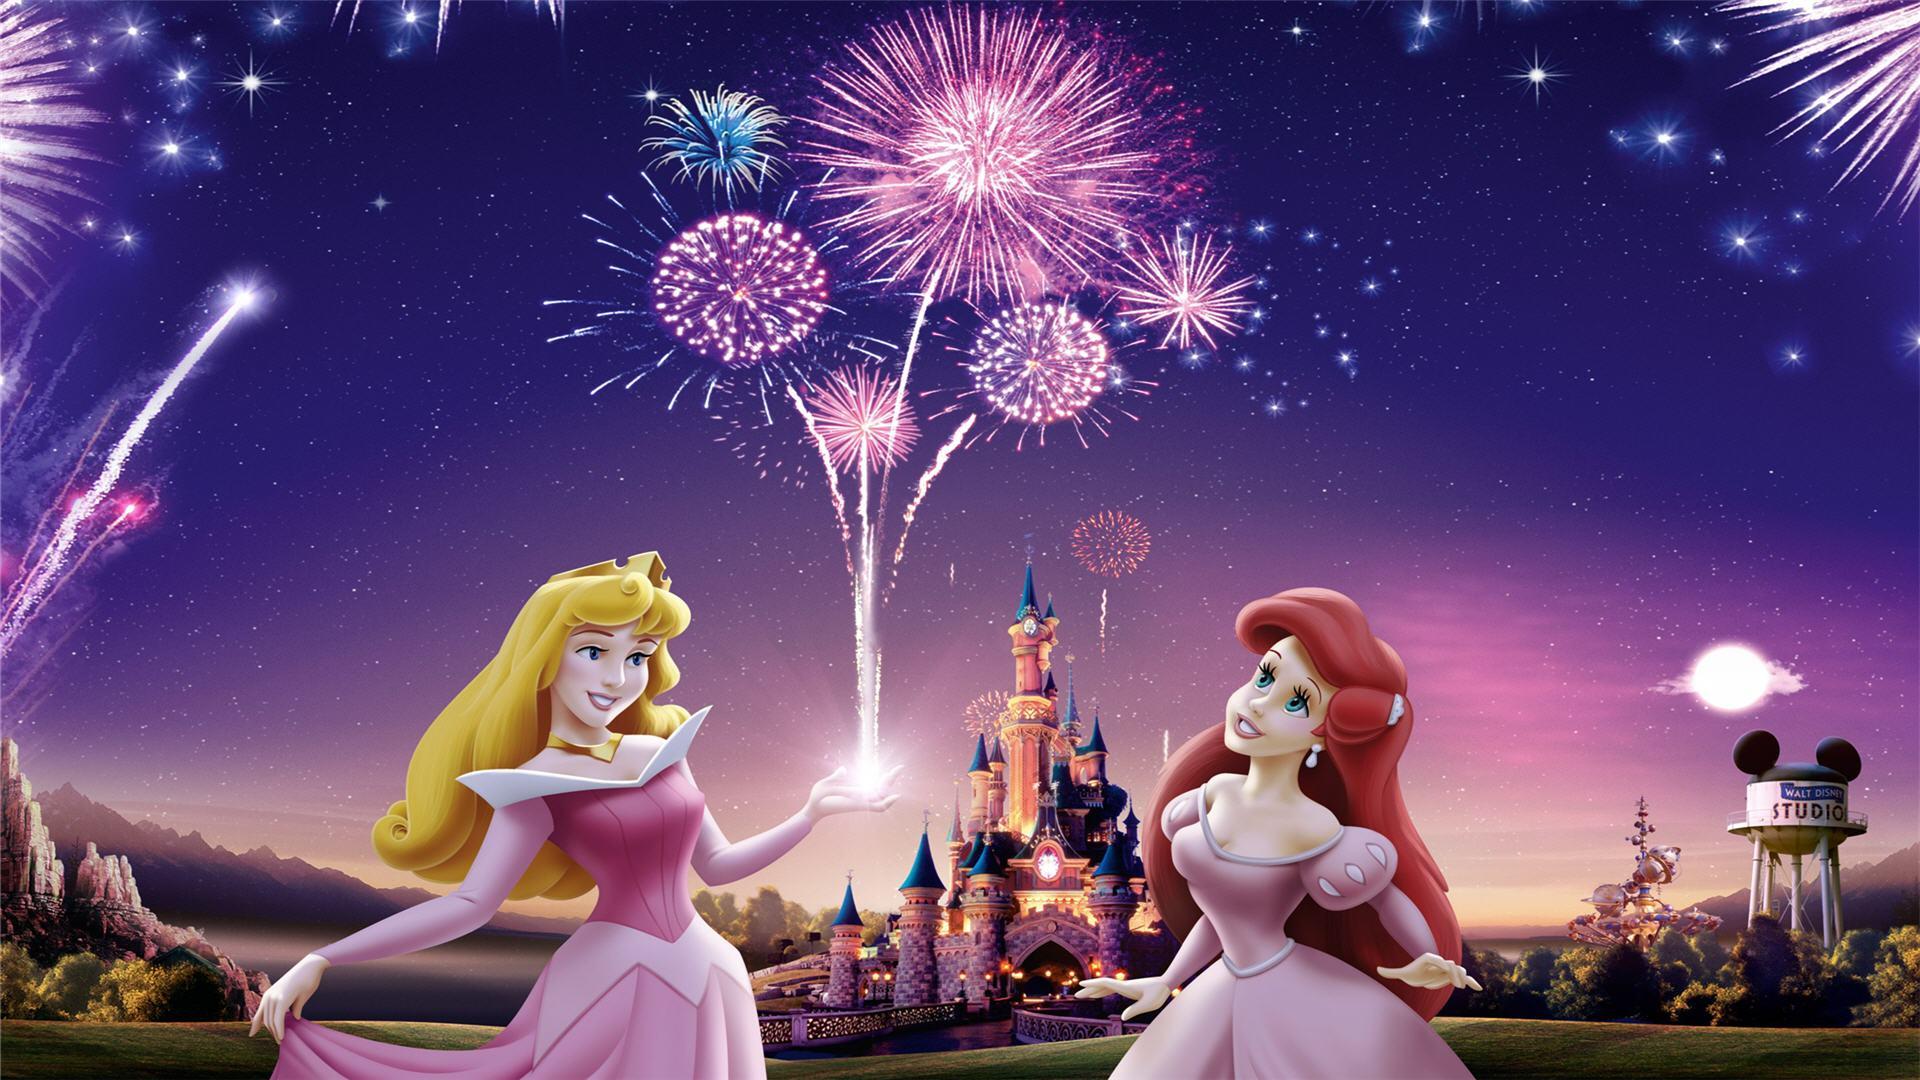 Disney Princess Wallpaper, Amazing Full HD Disney Princess